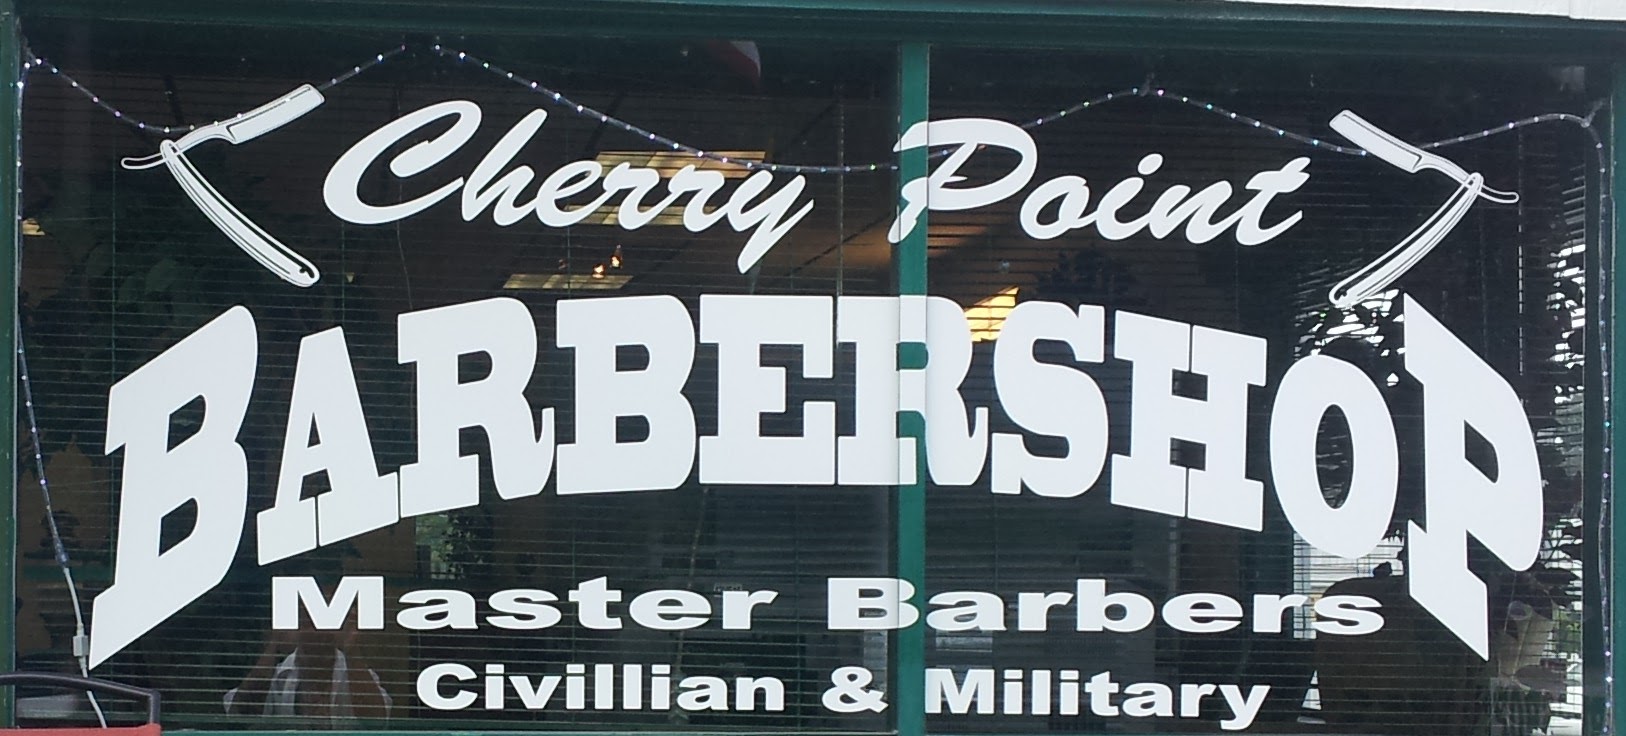 Cherry Point Barbershop